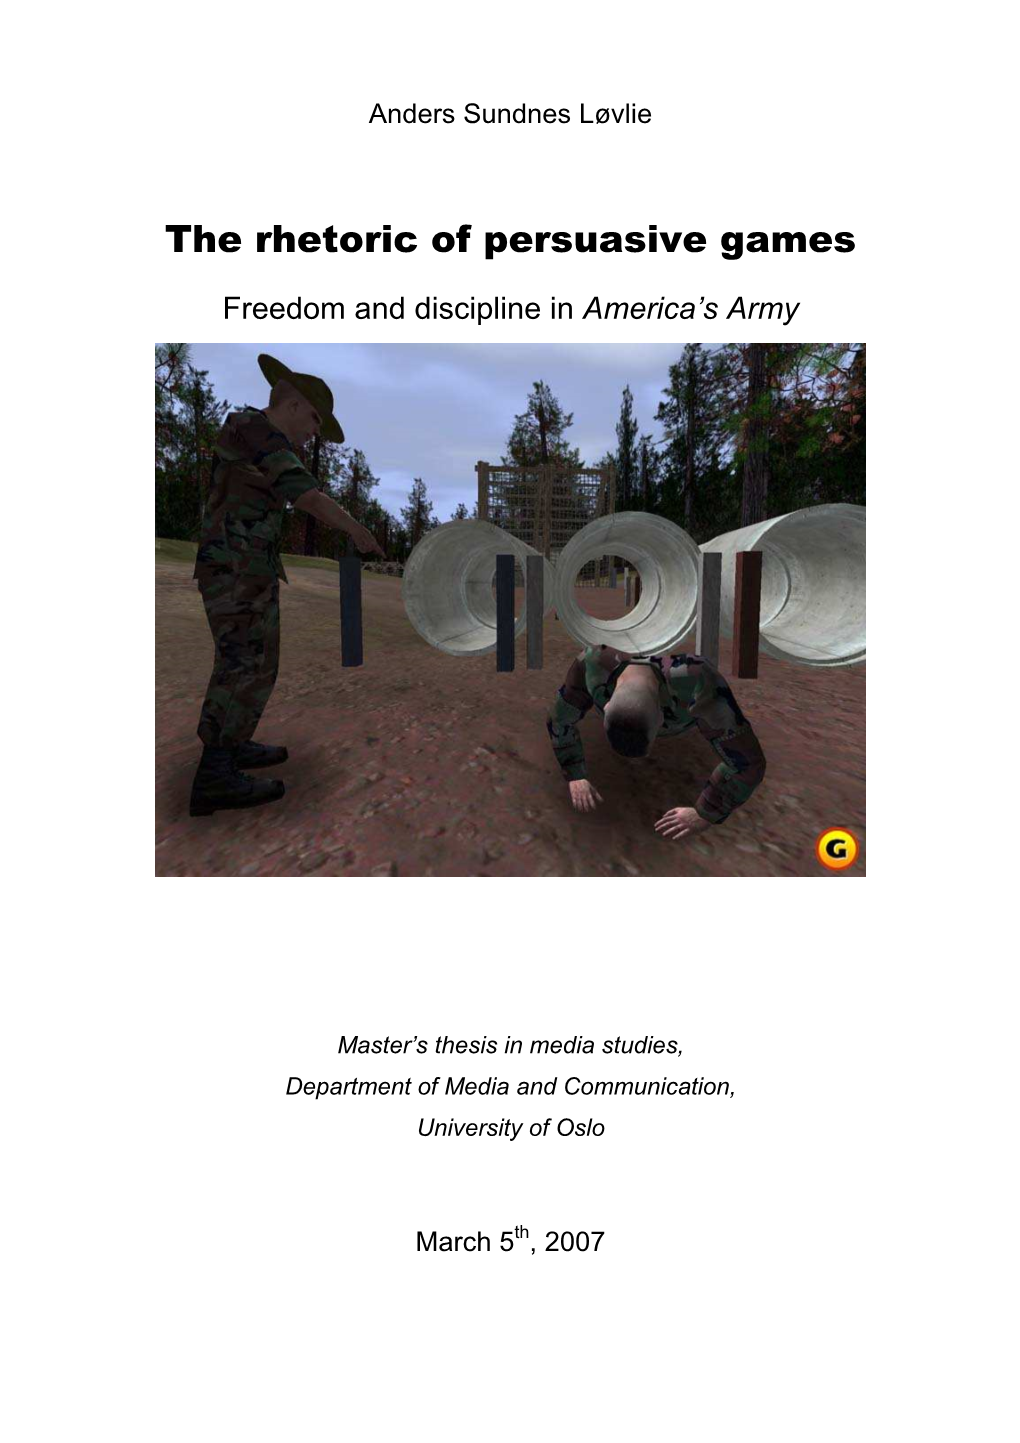 The Rhetoric of Persusasive Games